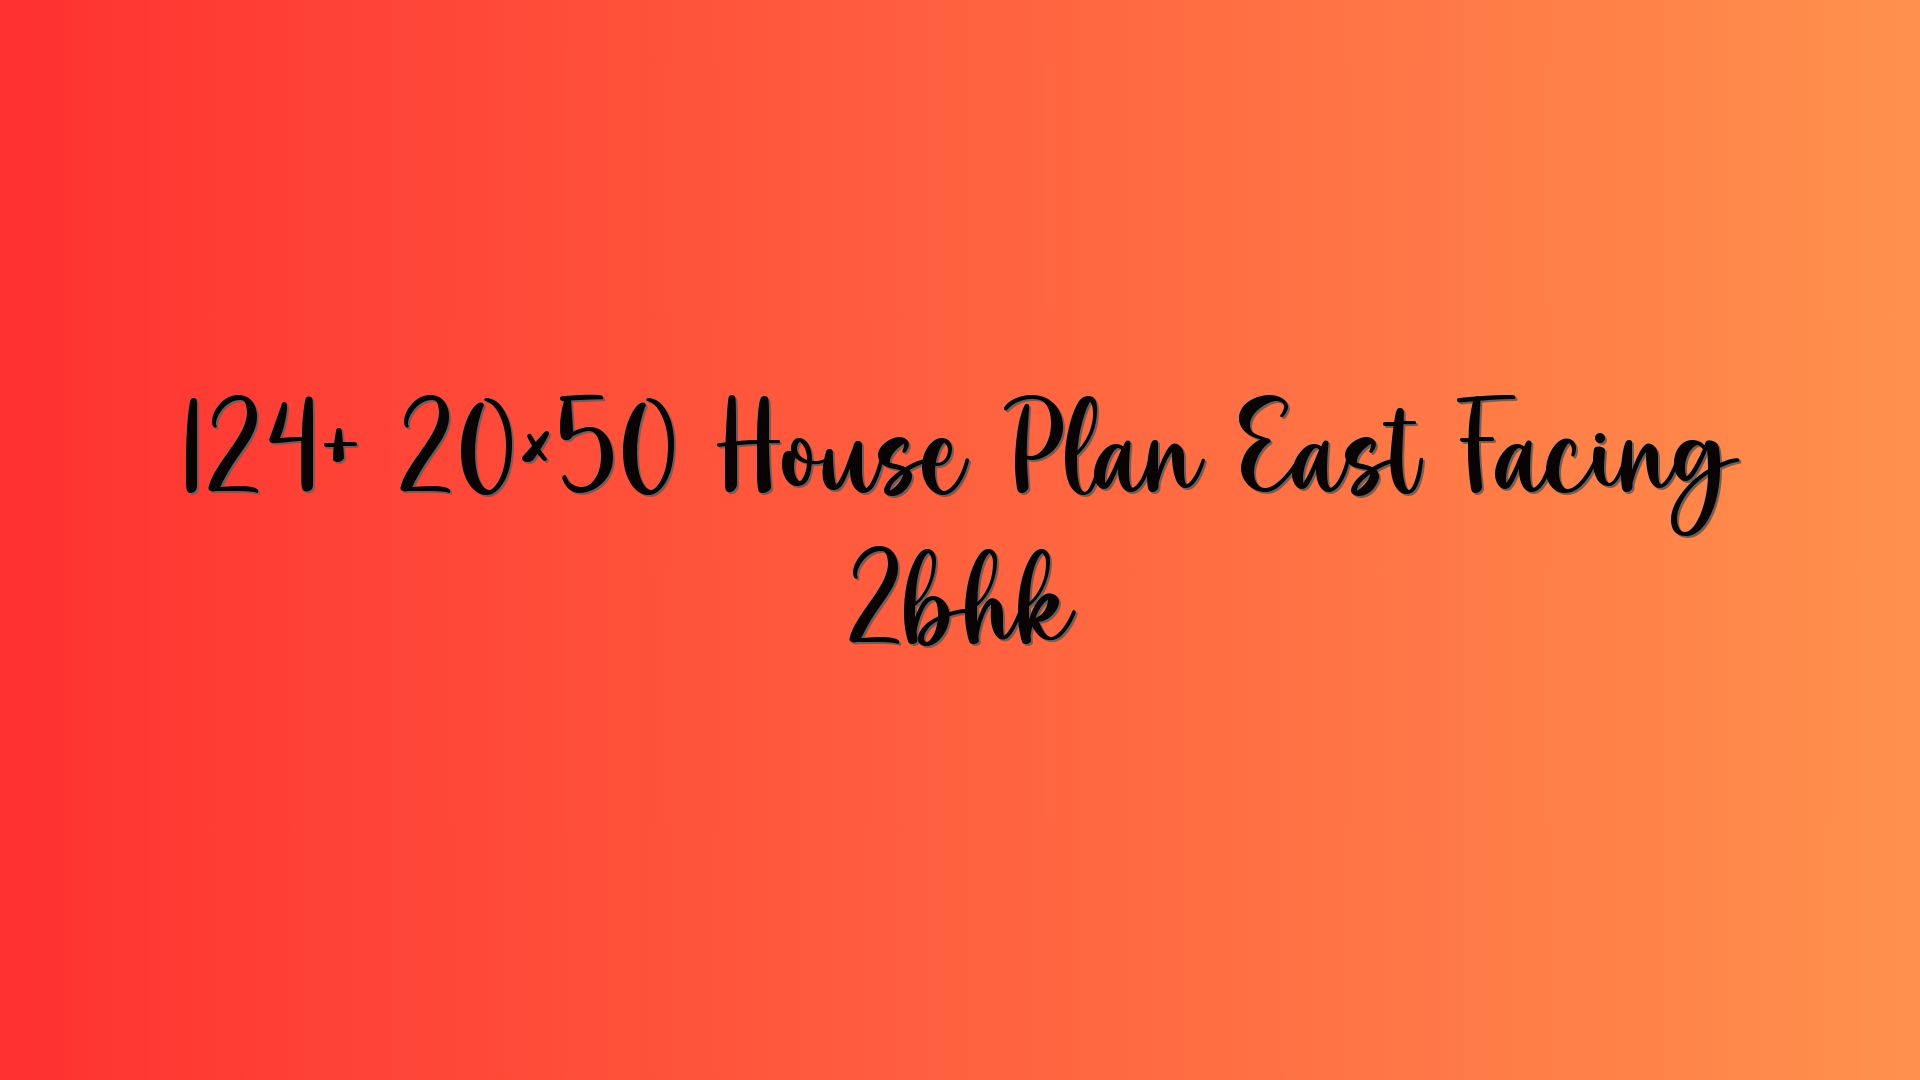 124+ 20×50 House Plan East Facing 2bhk